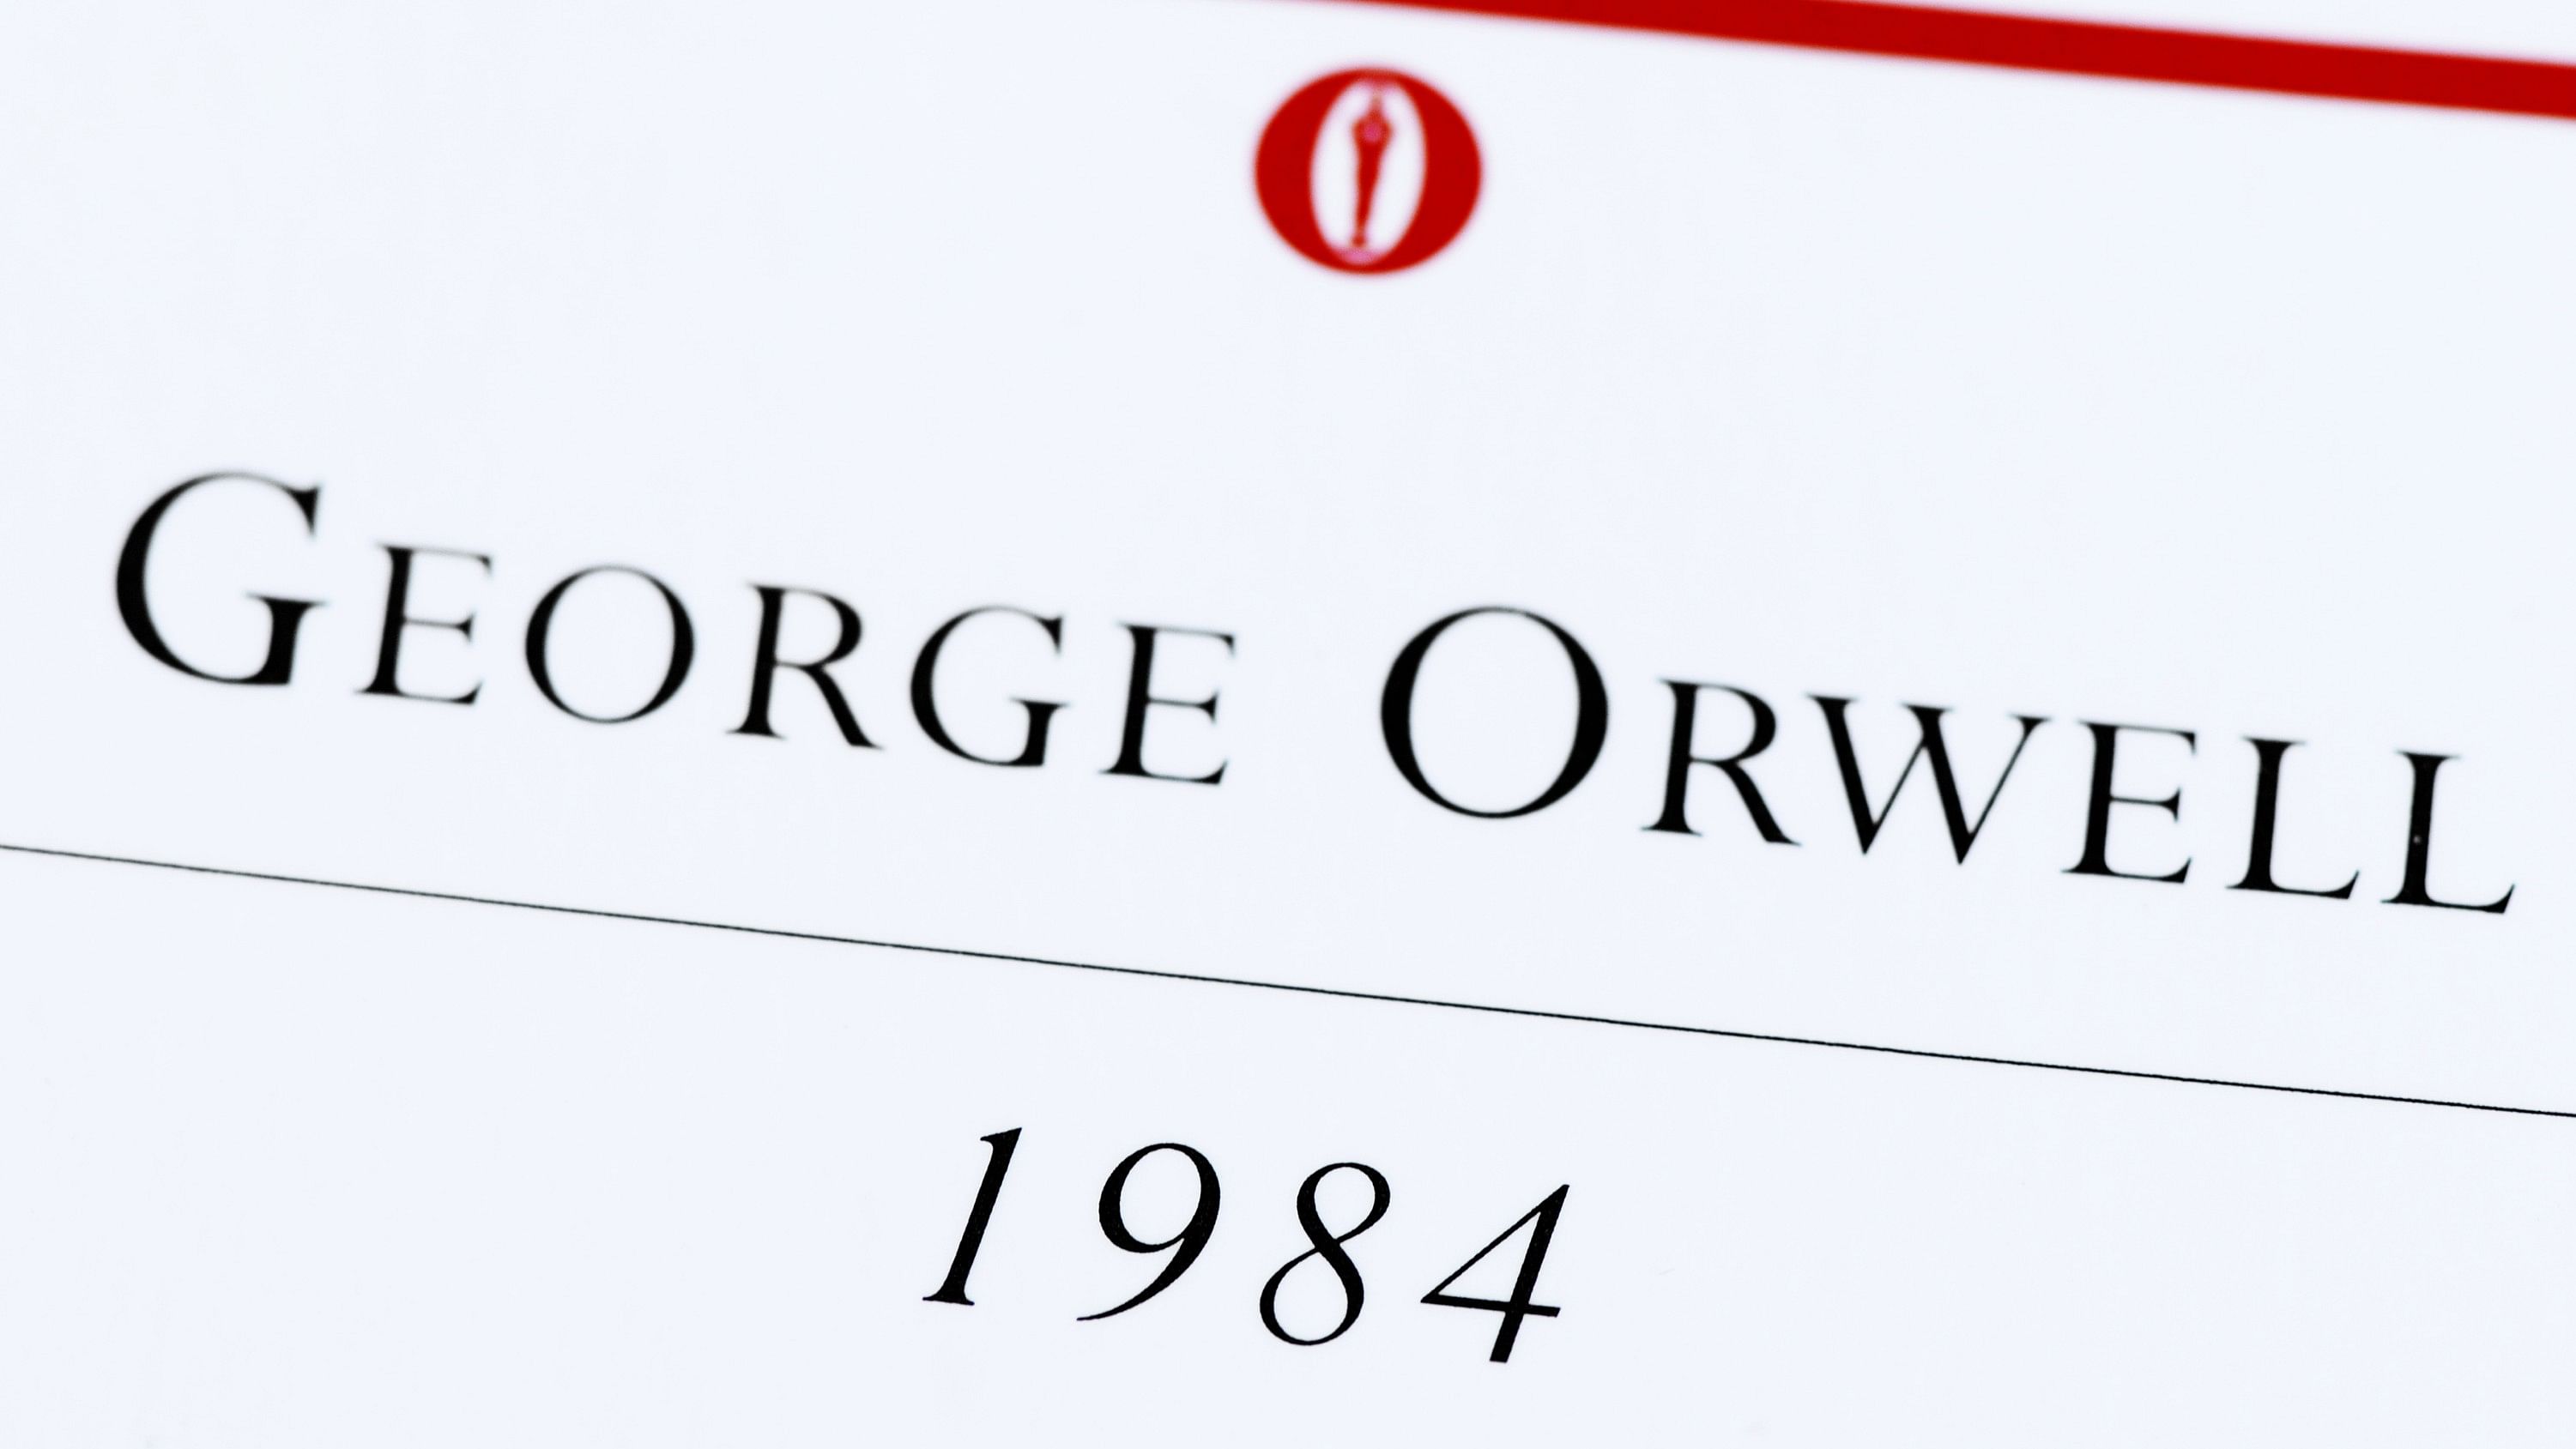 <div class="paragraphs"><p>George Orwell 1984 book macro, Italian version published by Oscar Mondadori.</p></div>